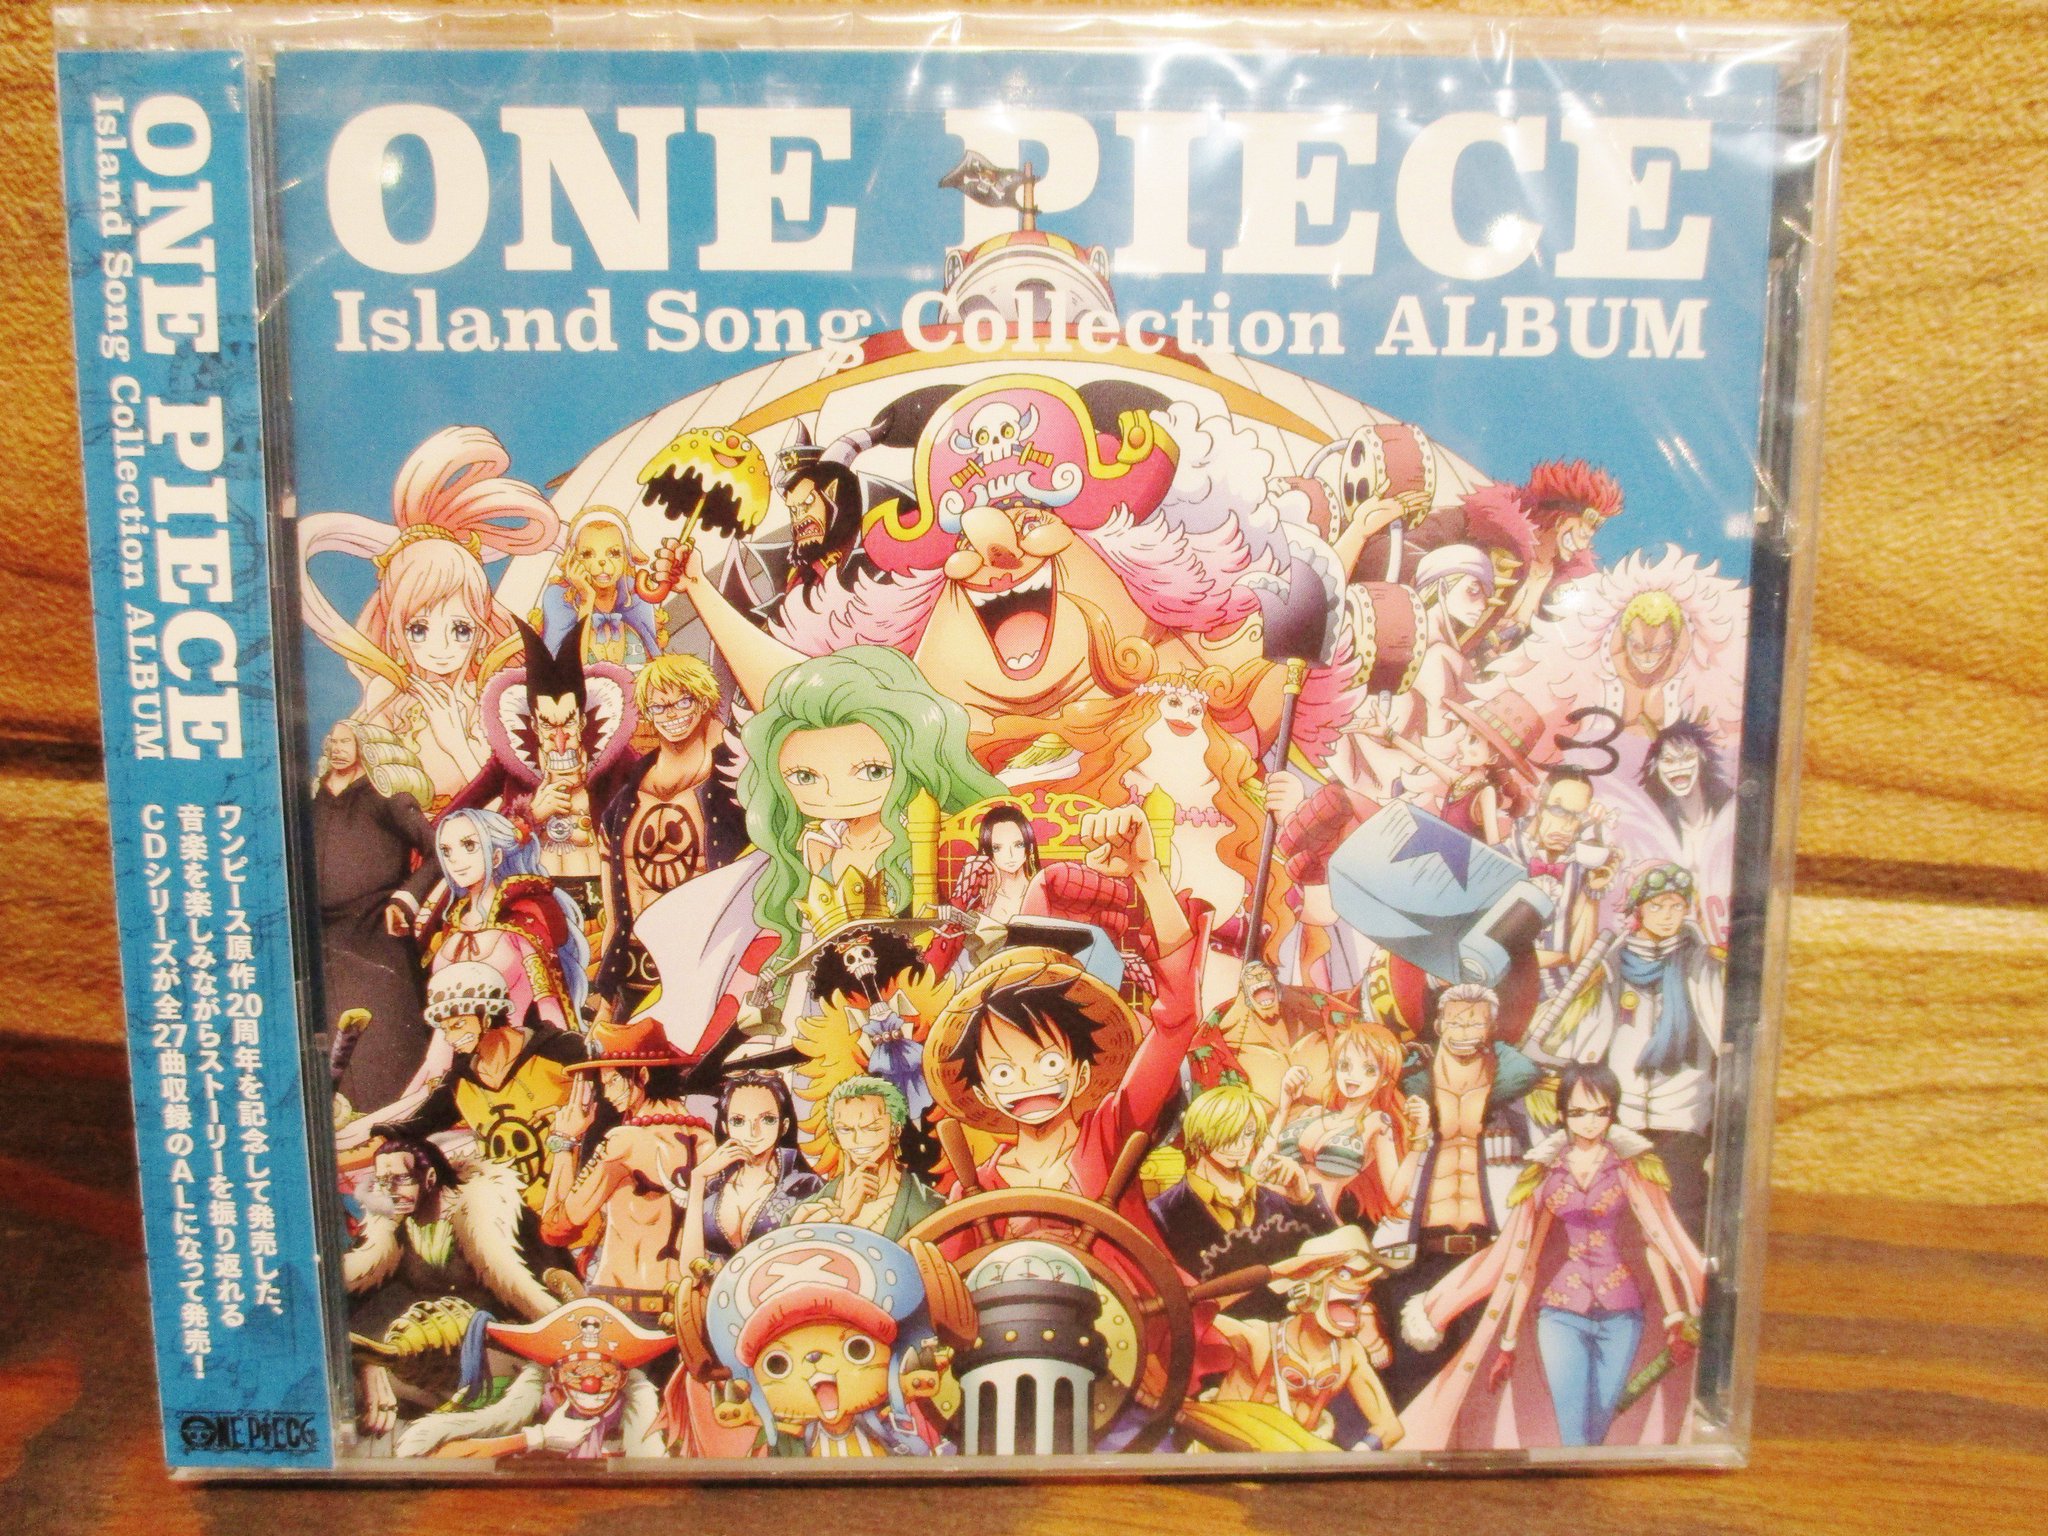 One Piece 麦わらストアあべの店 على تويتر 新商品 Cd One Piece Island Song Collection Album 3 500円 税 好評発売中 麦わらストア Onepiece